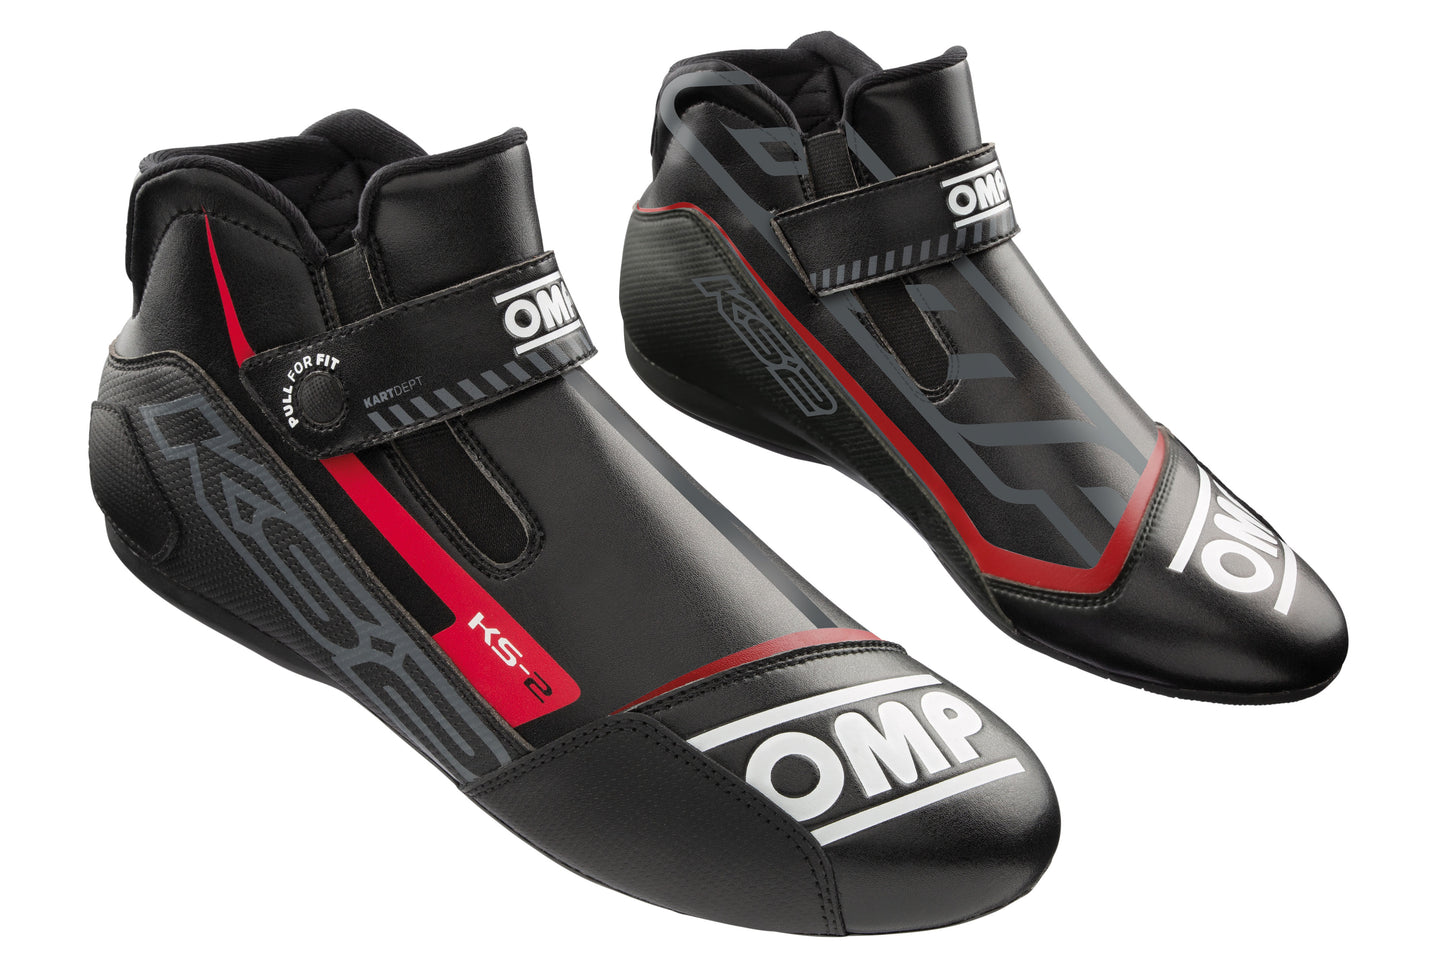 OMP KS2 KS-2 Karting Boots Kart Racing Microfibre Breathable All Sizes & Colours